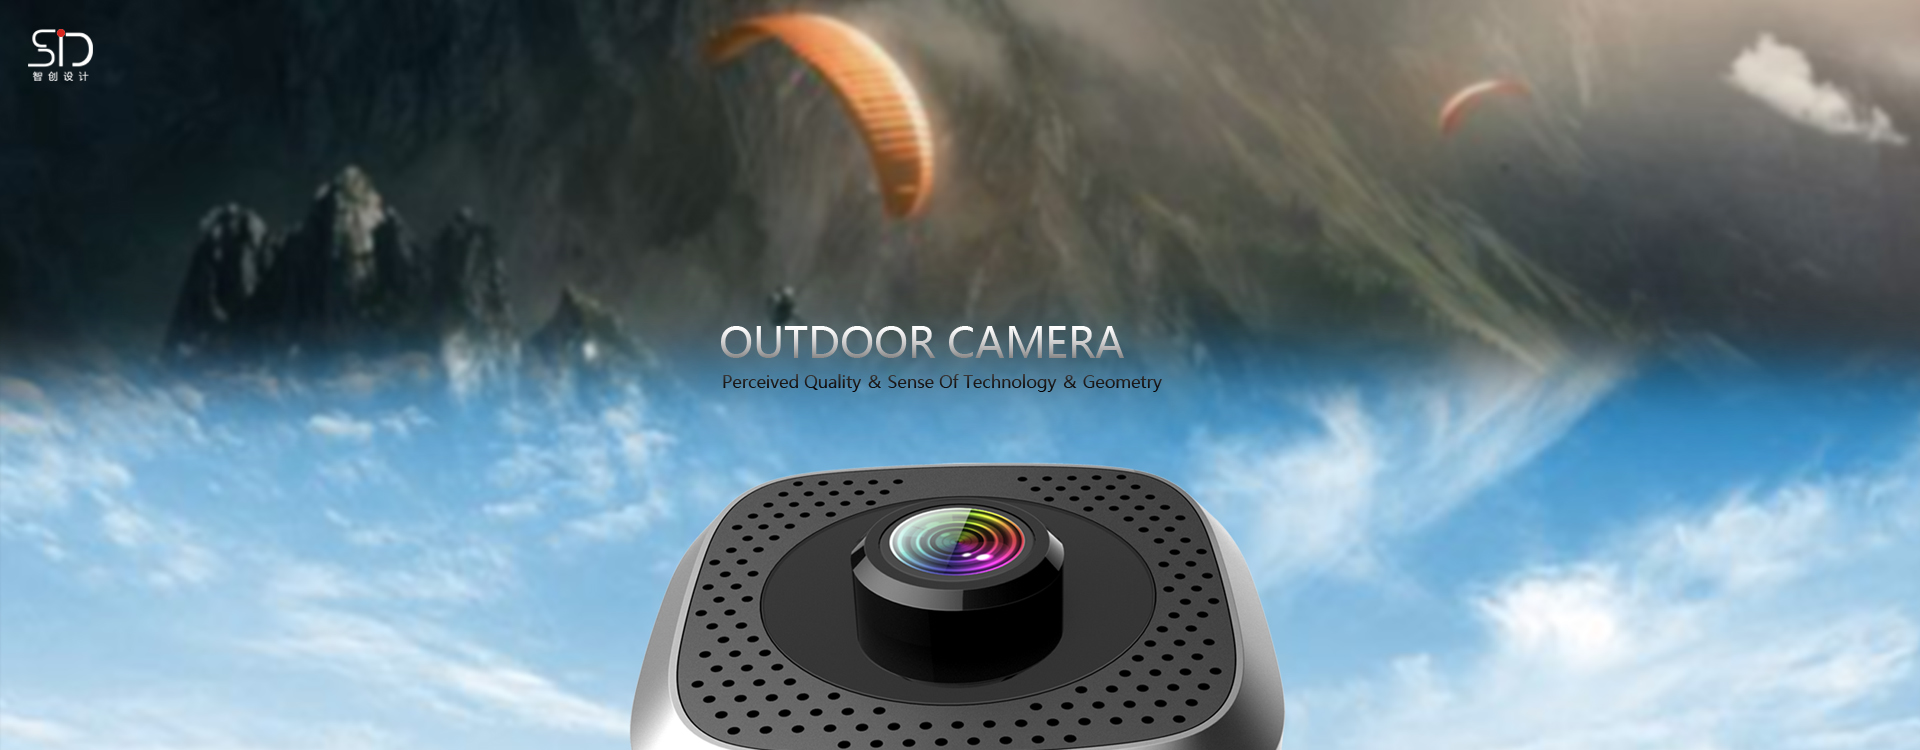 Outdoor Camera 工(gōng)業設備設計